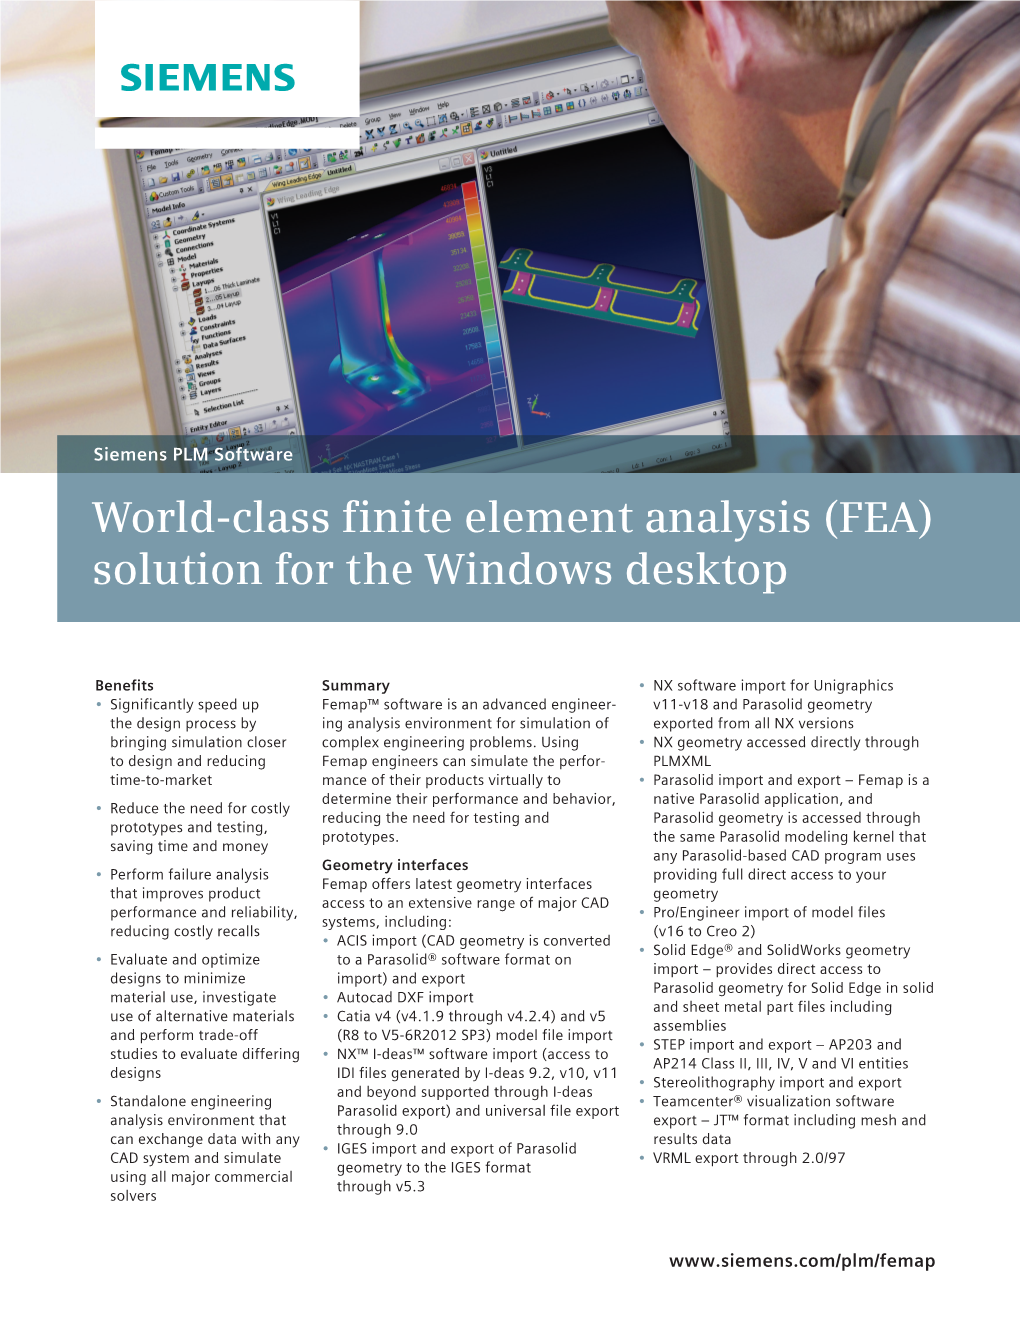 World-Class Finite Element Analysis (FEA) Solution for the Windows Desktop